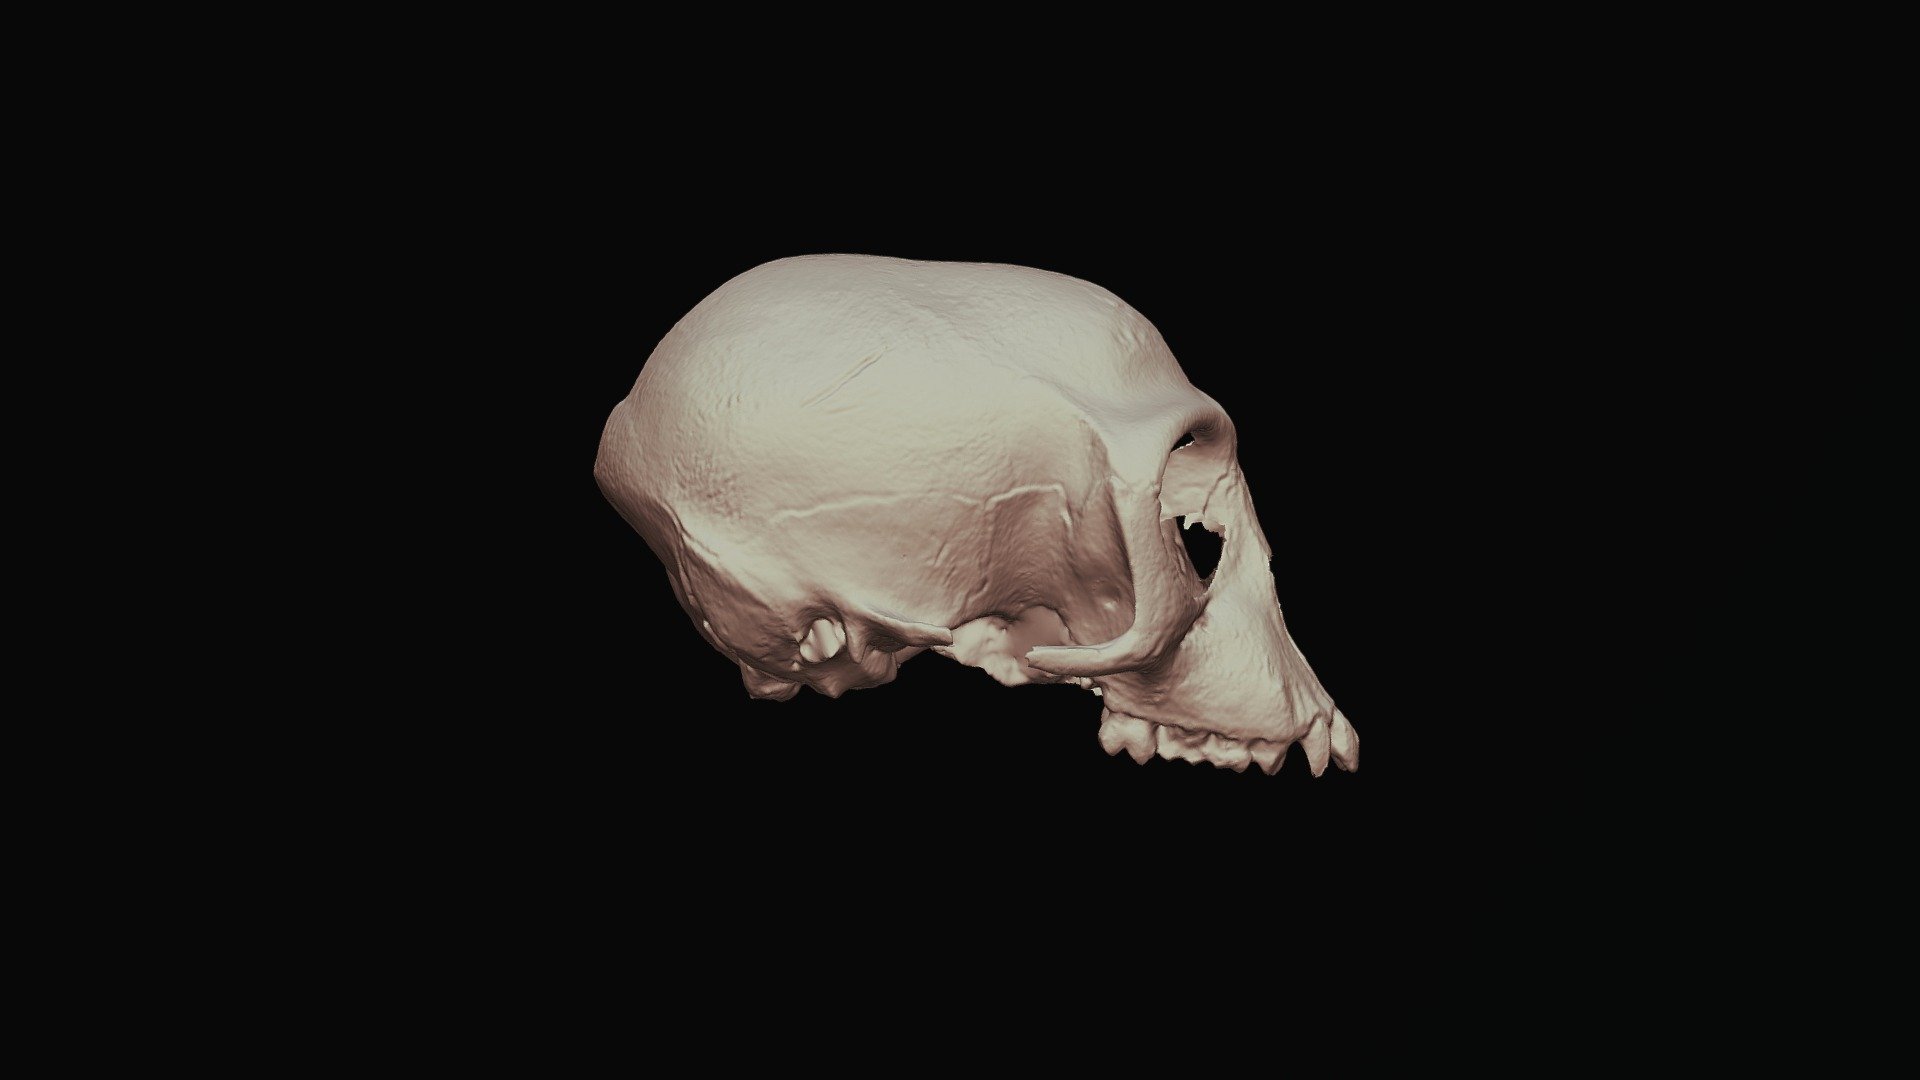 Monkey Skull-Cercopithecus aethiops pygerythus